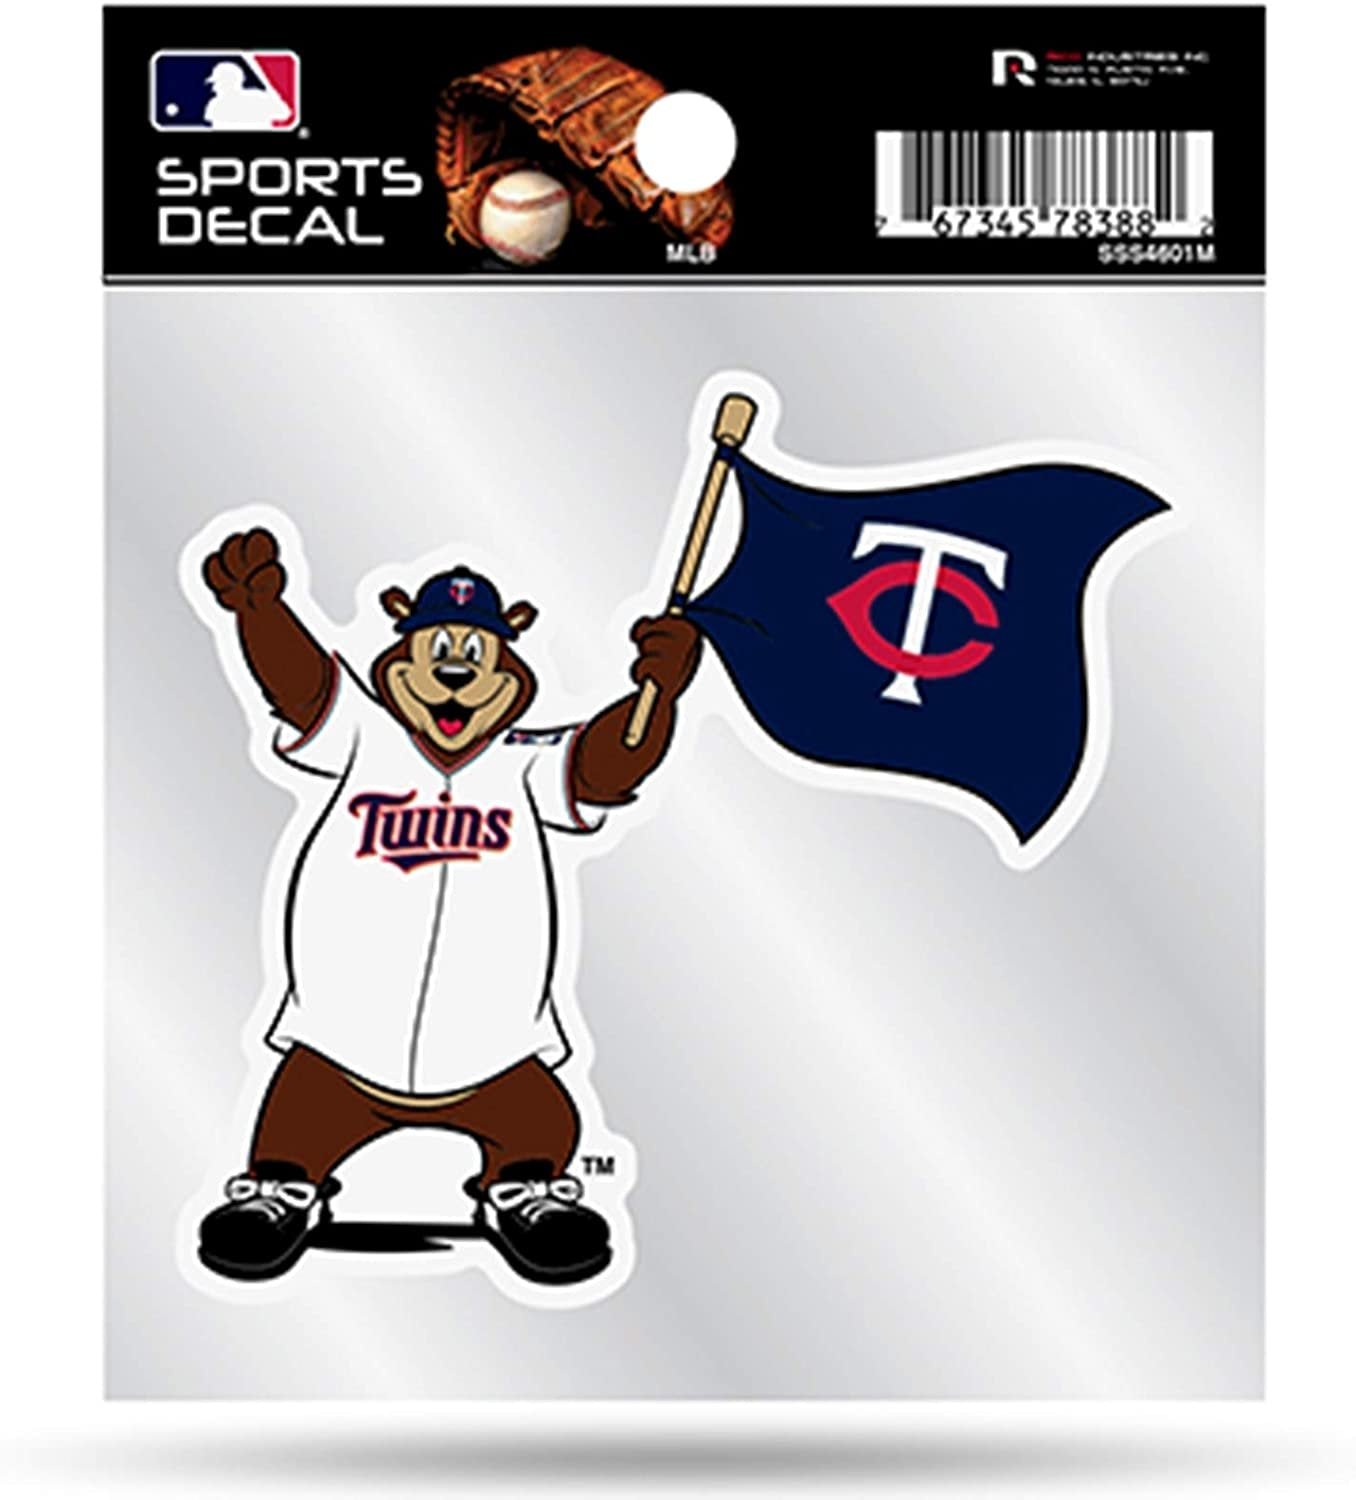 Minnesota Twins Mascot Logo Premium 4x4 Decal with Clear Backing Flat Vinyl Auto Home Sticker Baseball